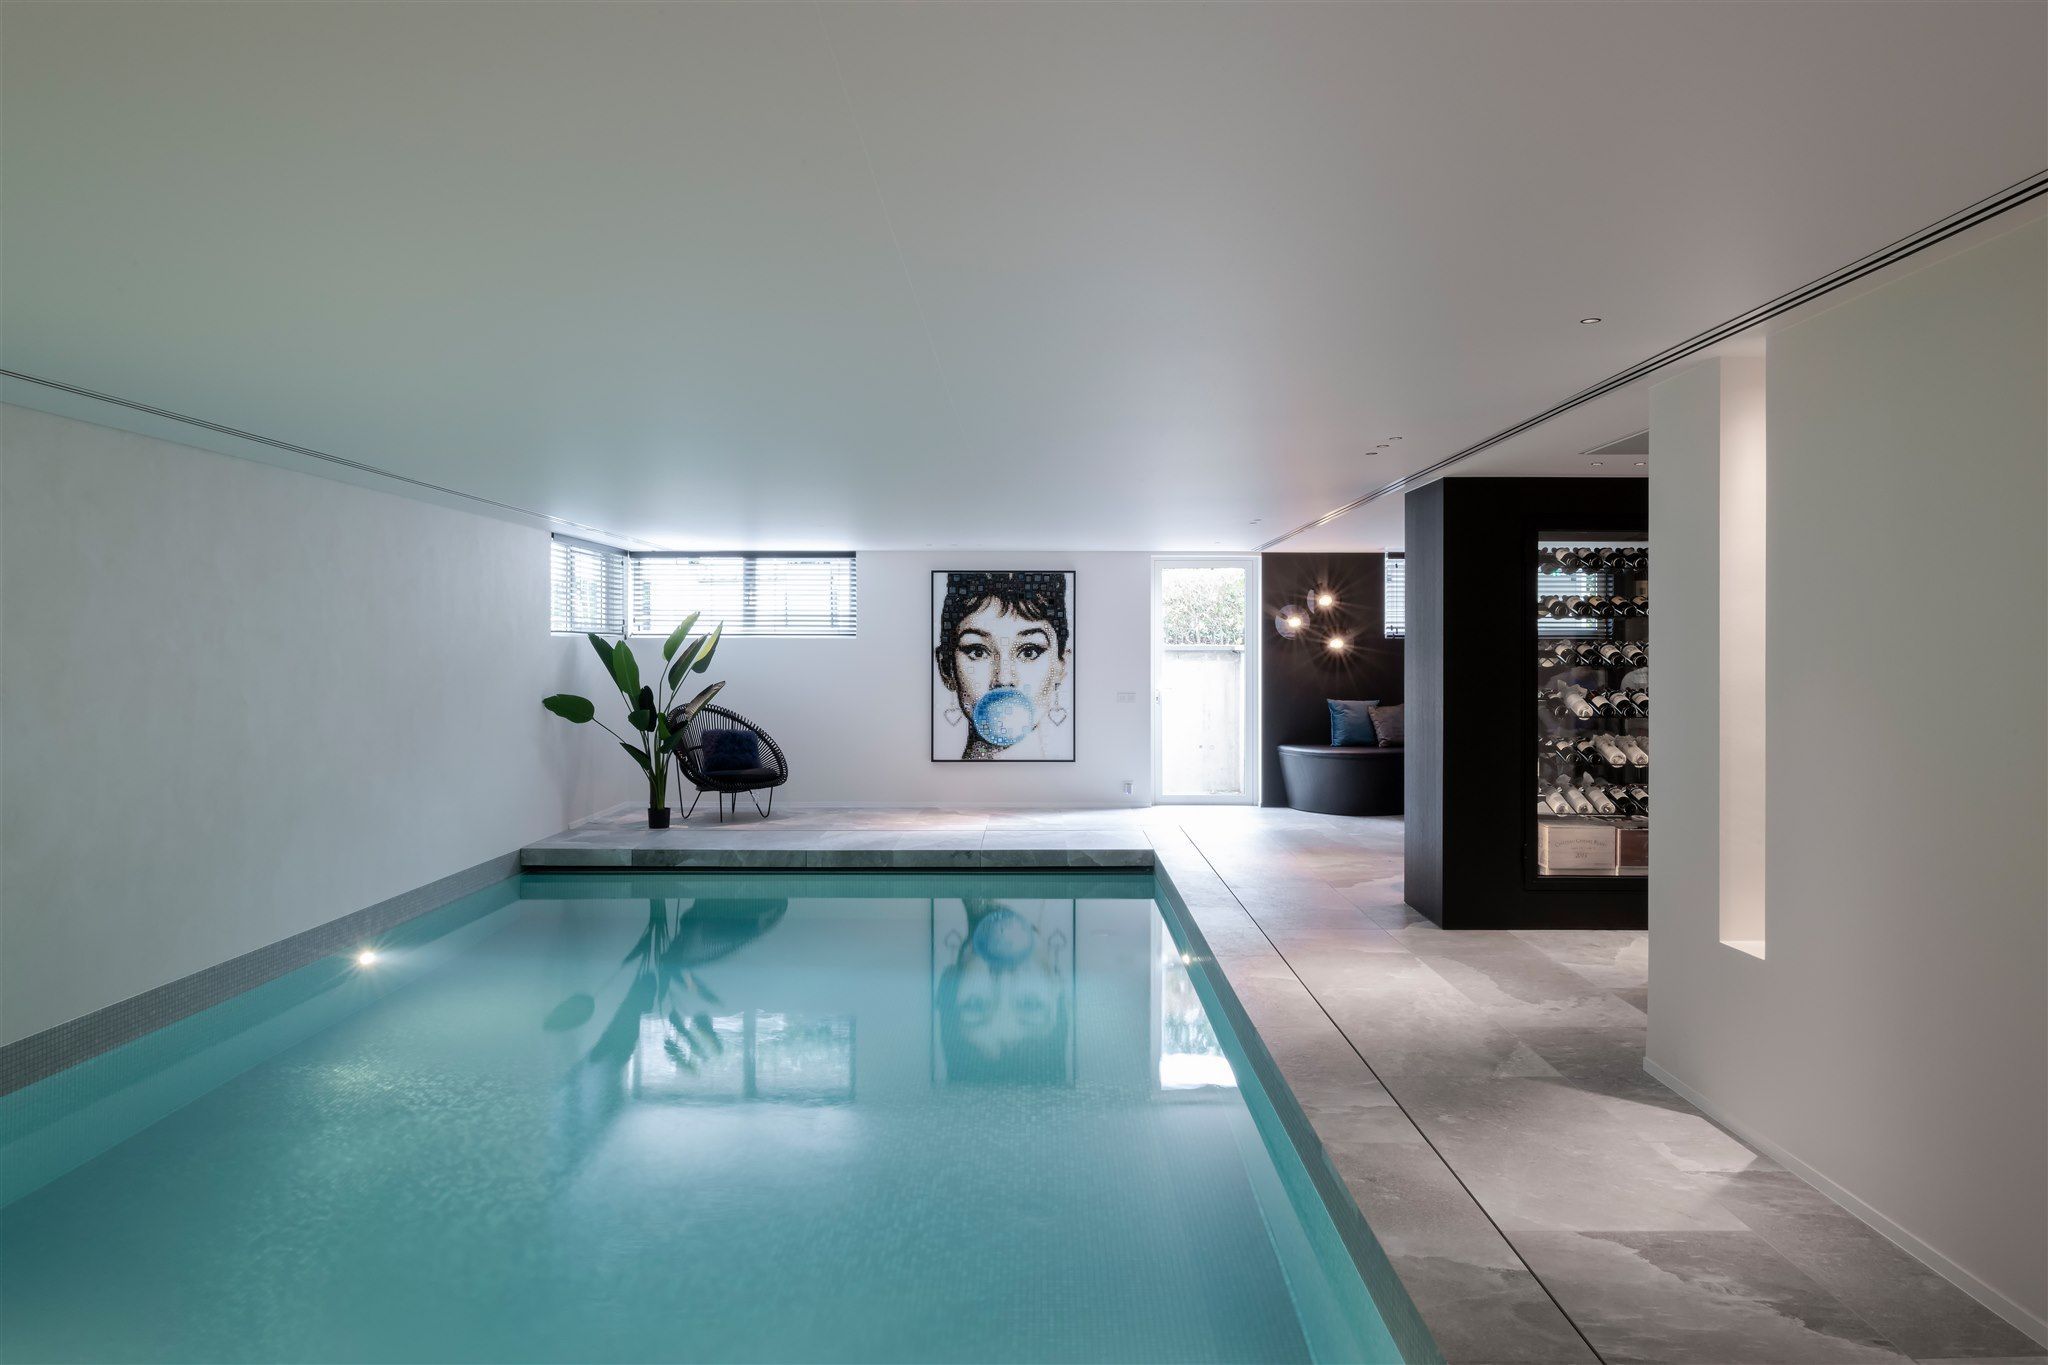 Lounge met zwembad en poolhouse - Wortegem-Petegem | Florence Ghyselen Interieurarchitecten